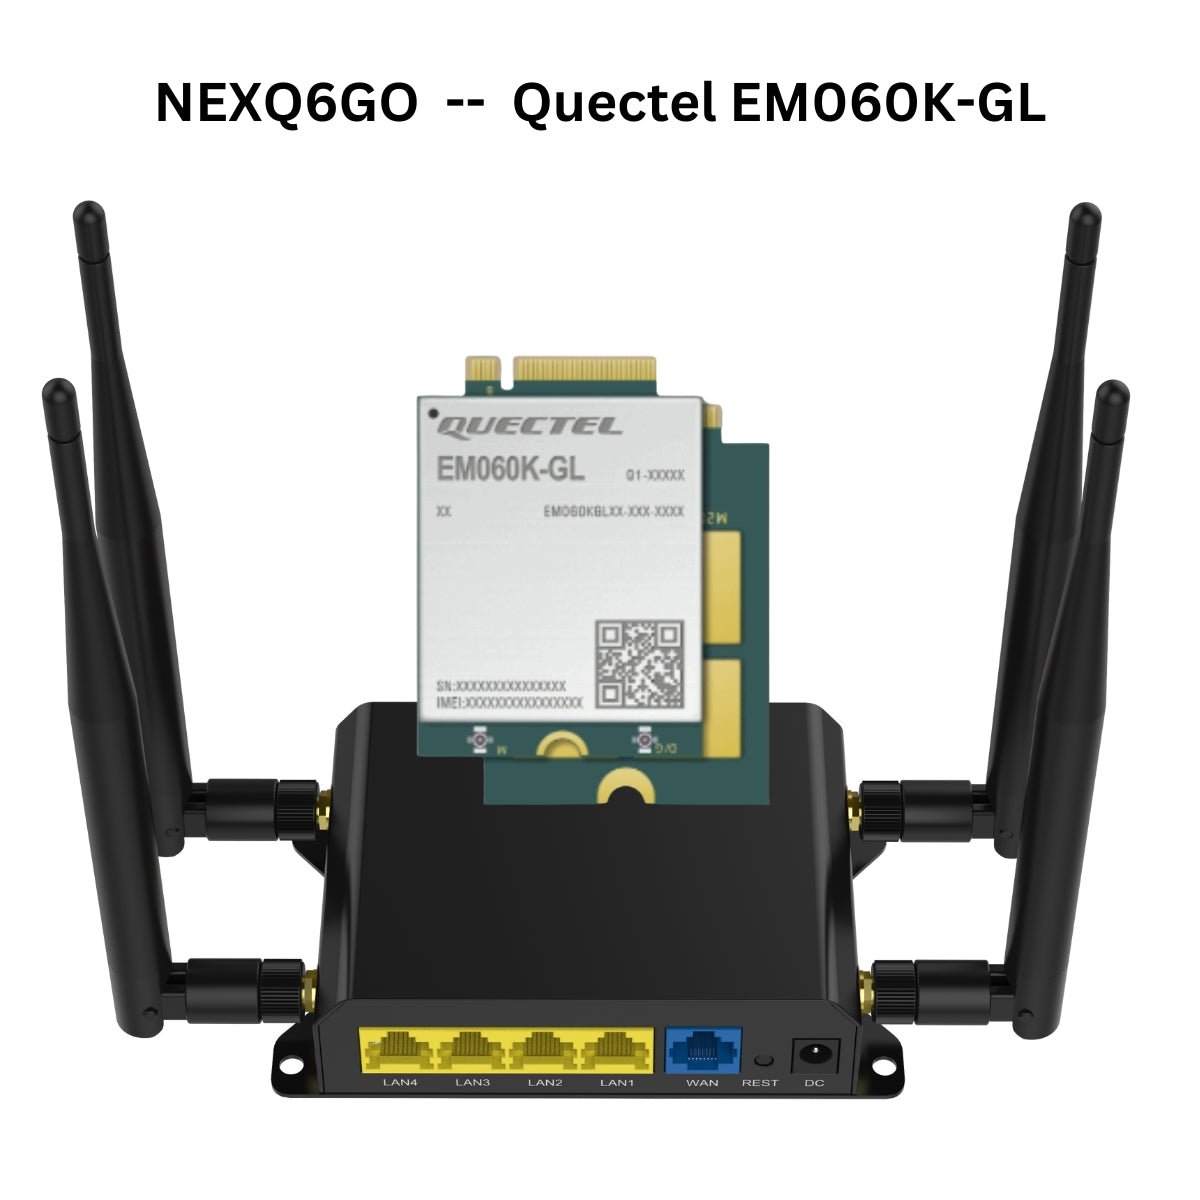 NEXQ6GO Cellular Ready - 2.4GHz WiFi Router